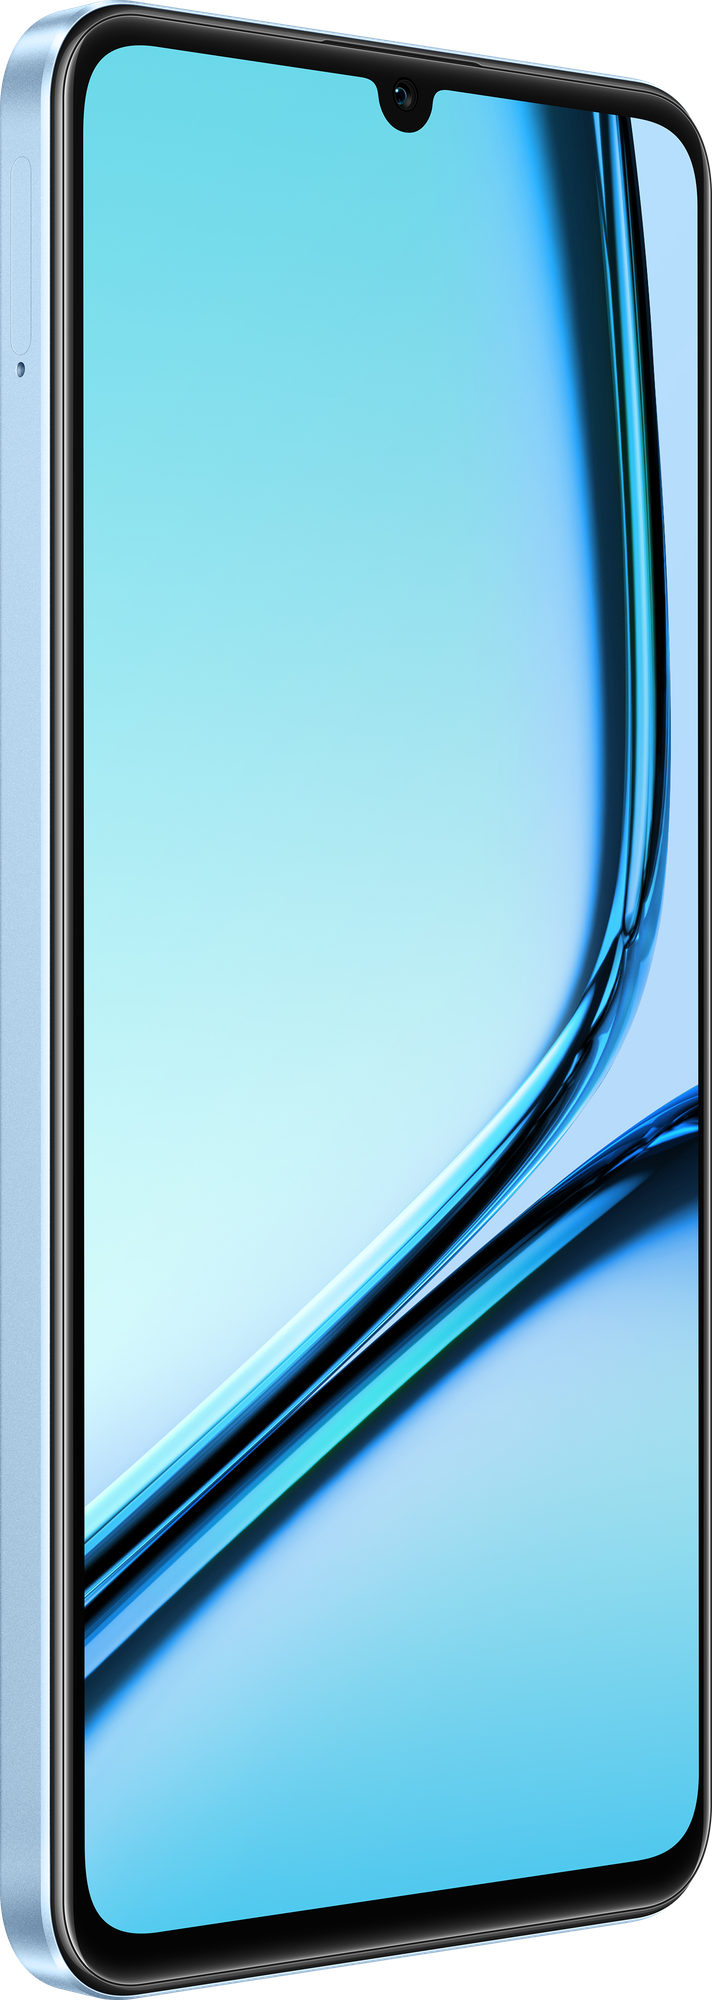 Сотовый телефон Realme Note 50 4/128Gb Blue